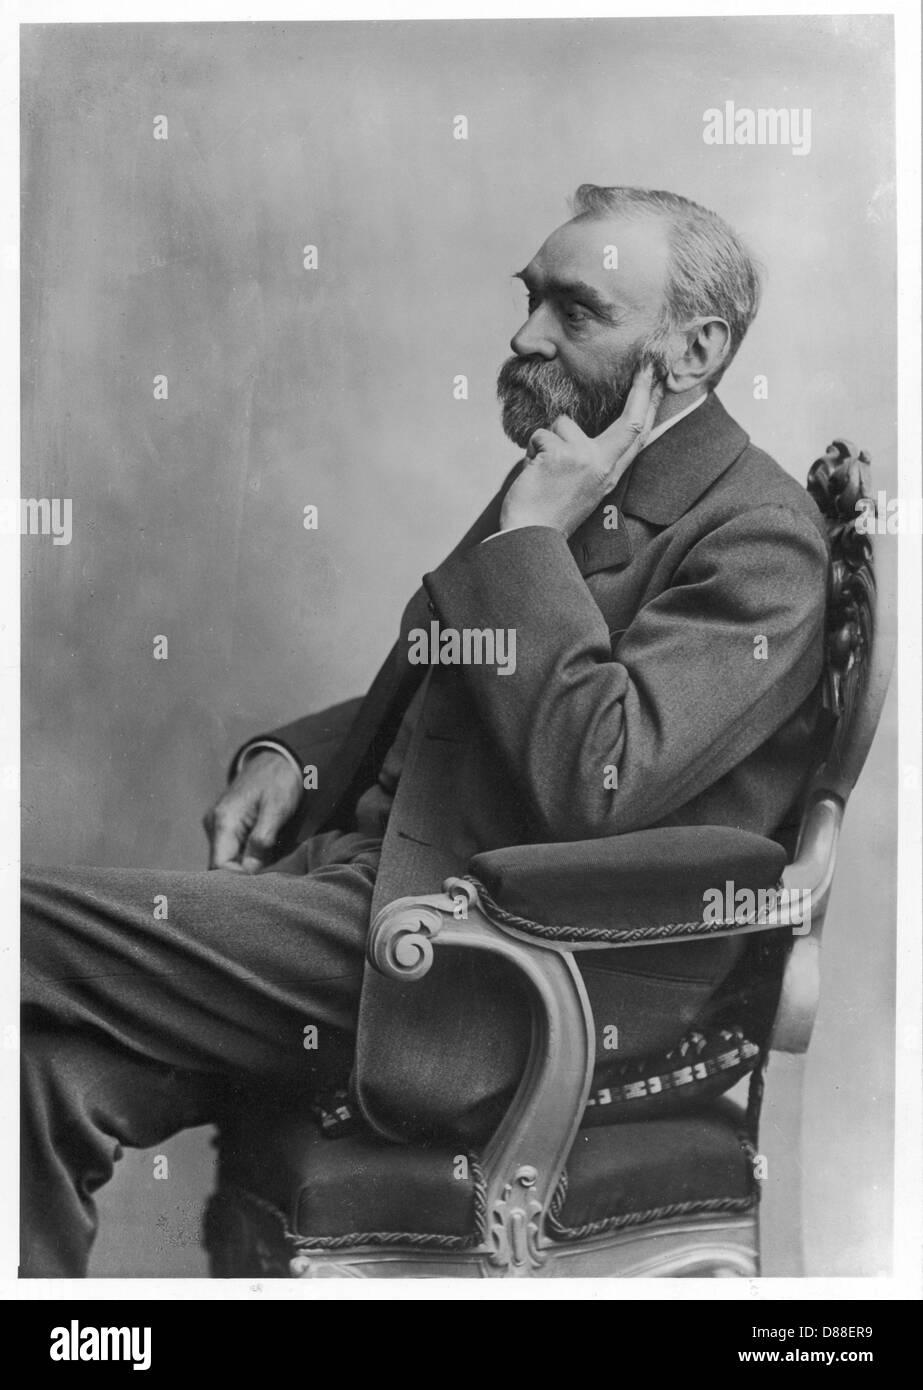 Alfred Nobel Stock Photo